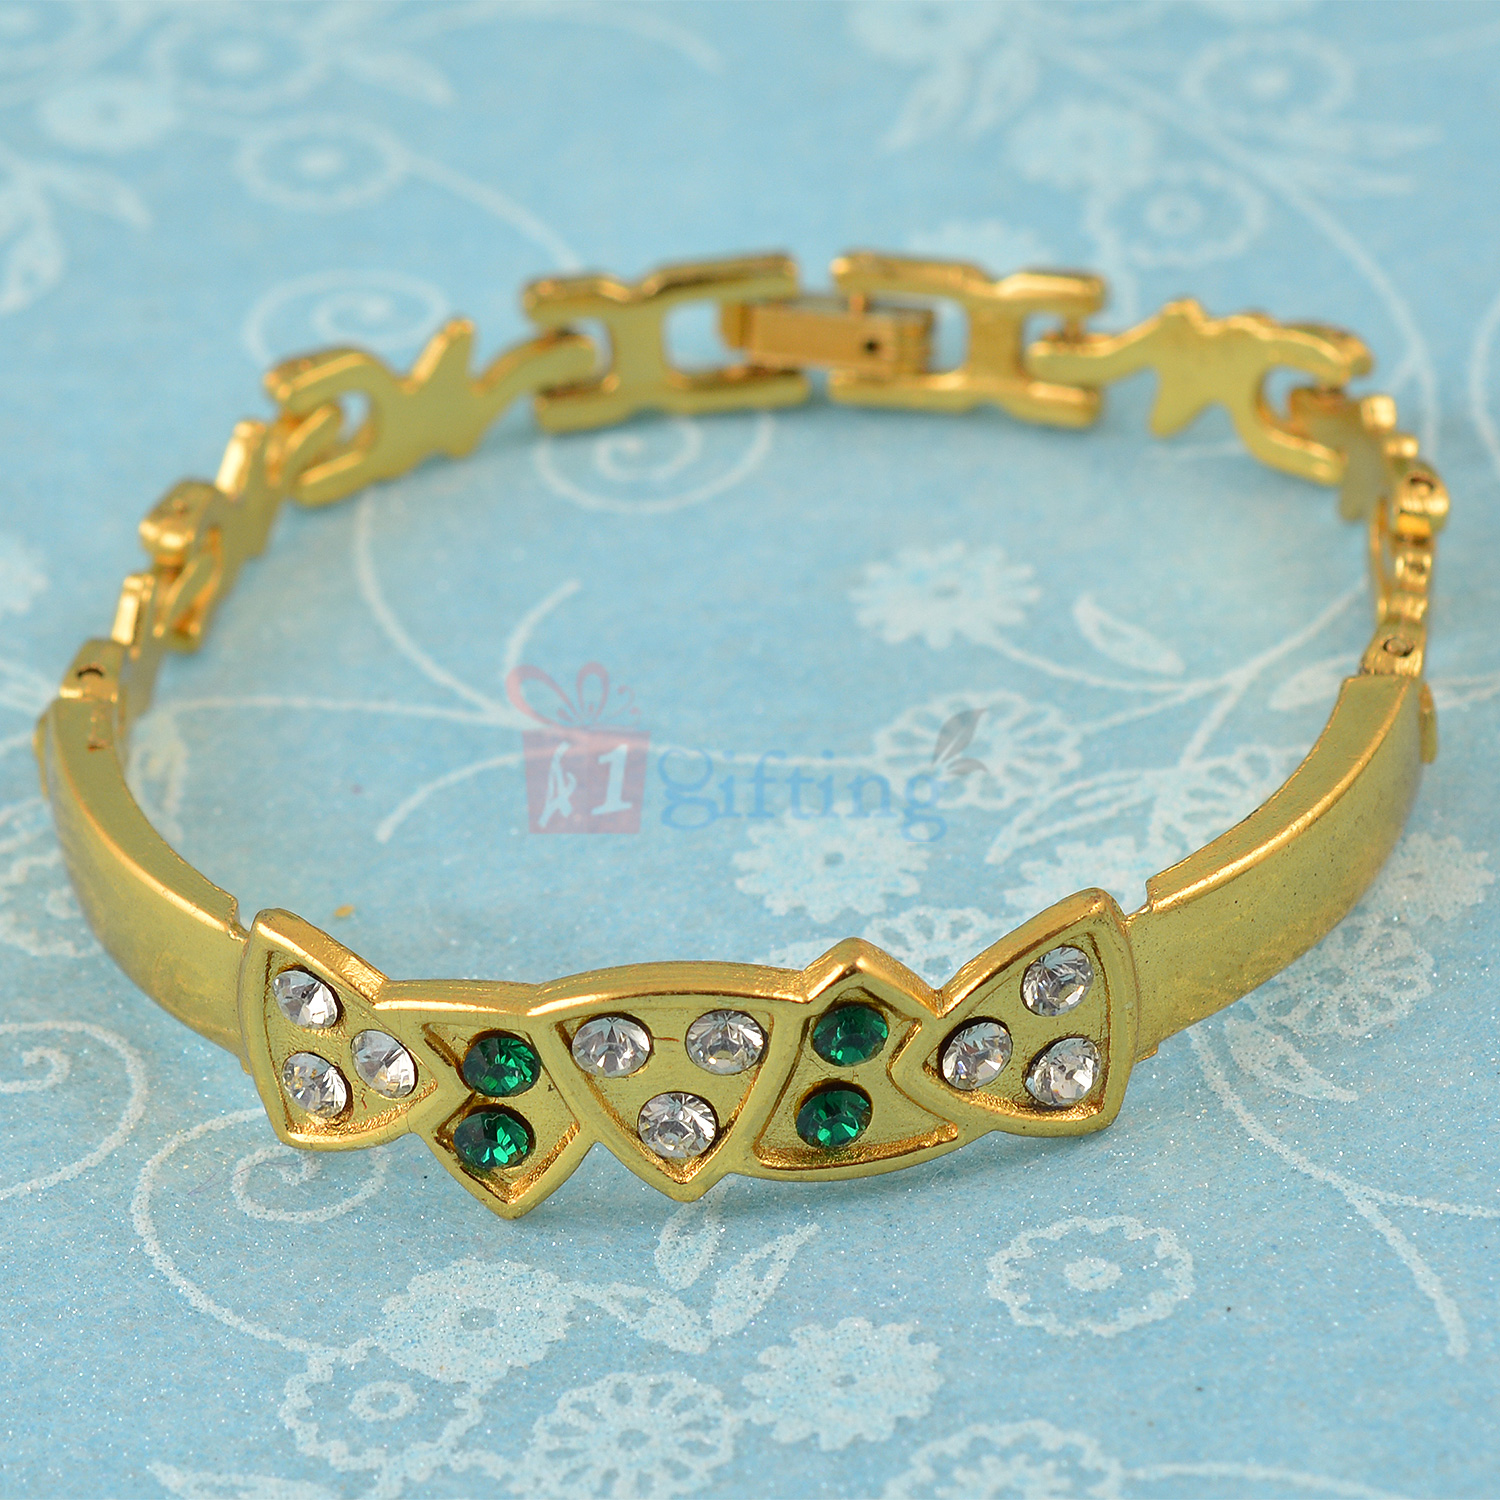 Amazing Golden Designer Bracelet with Diamonds